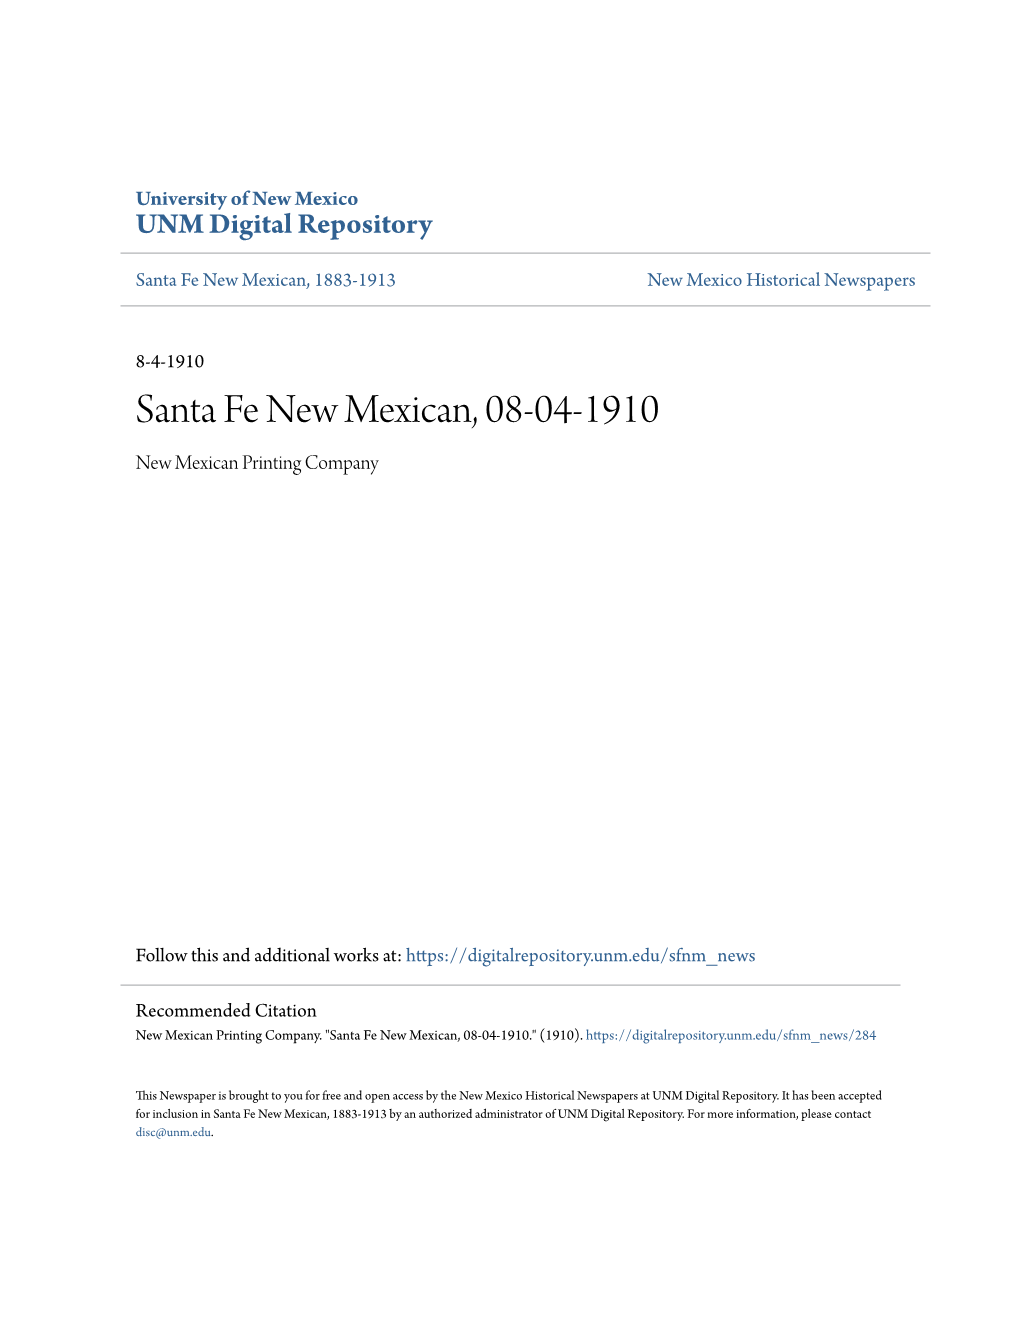 Santa Fe New Mexican, 08-04-1910 New Mexican Printing Company